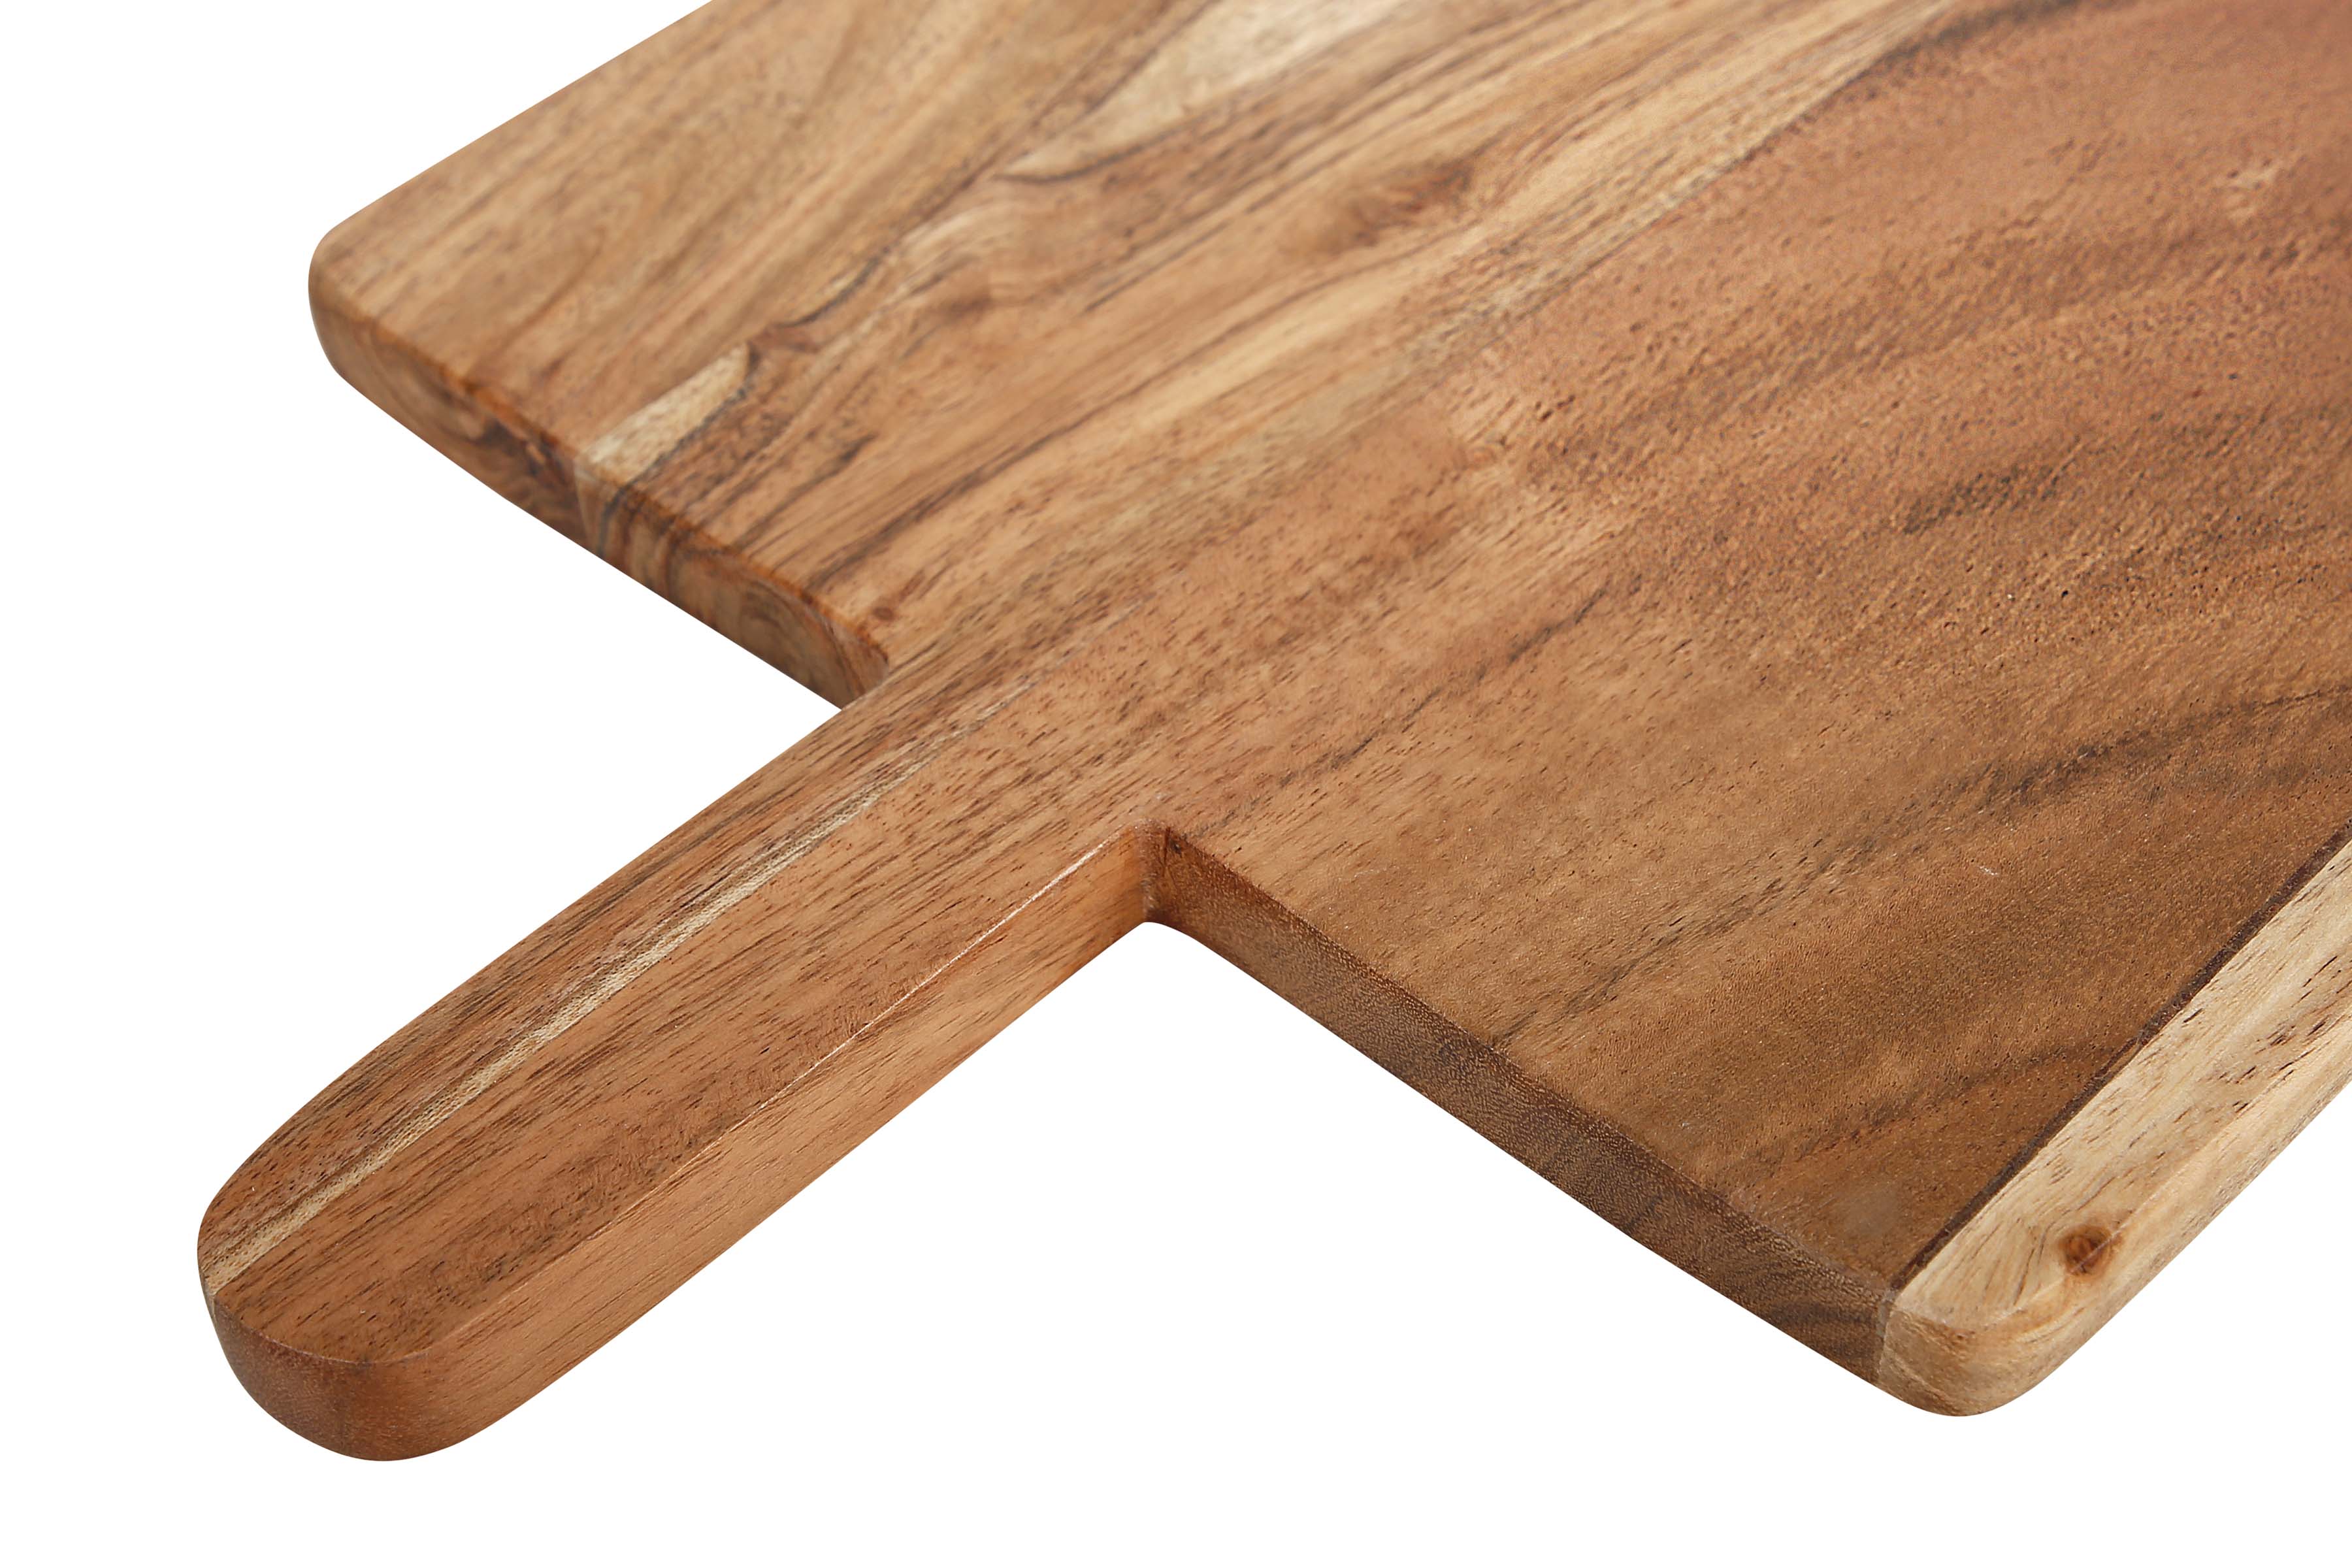 Handmade Acacia Wood Chopping Board - 14X10X0.5 Inch